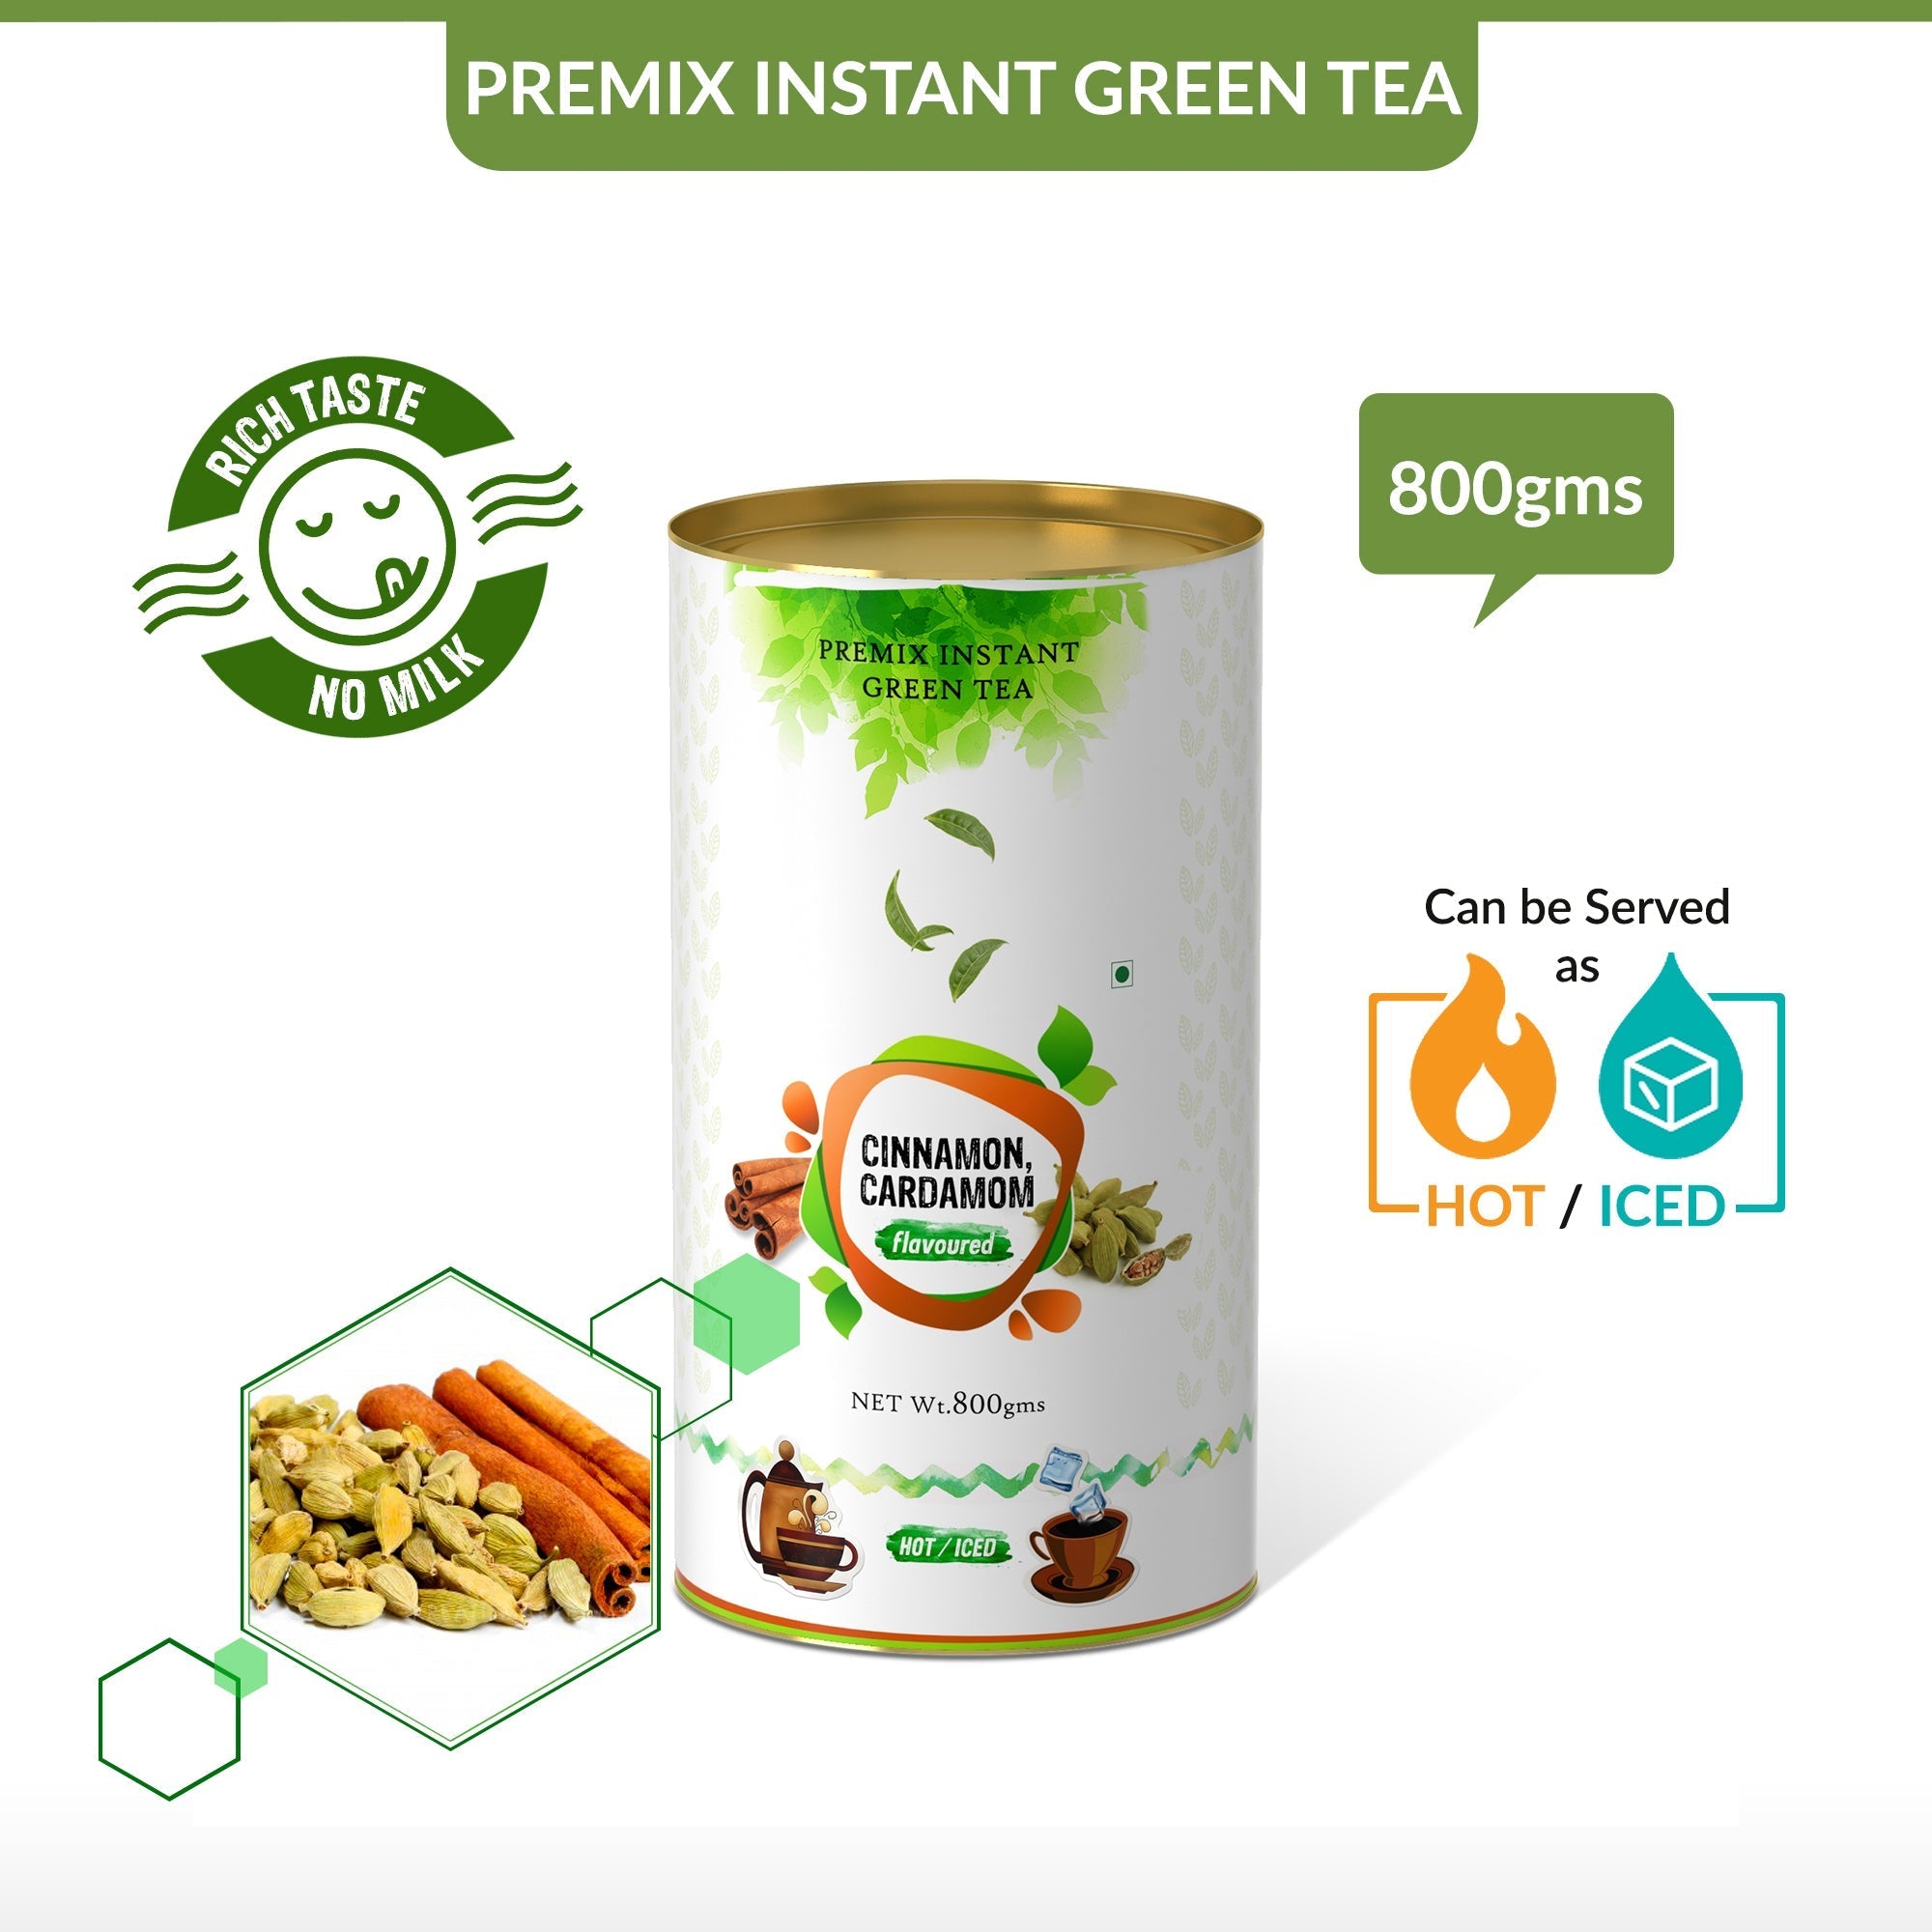 Cinnamon Cardamom Flavored Instant Green Tea - 800 gms